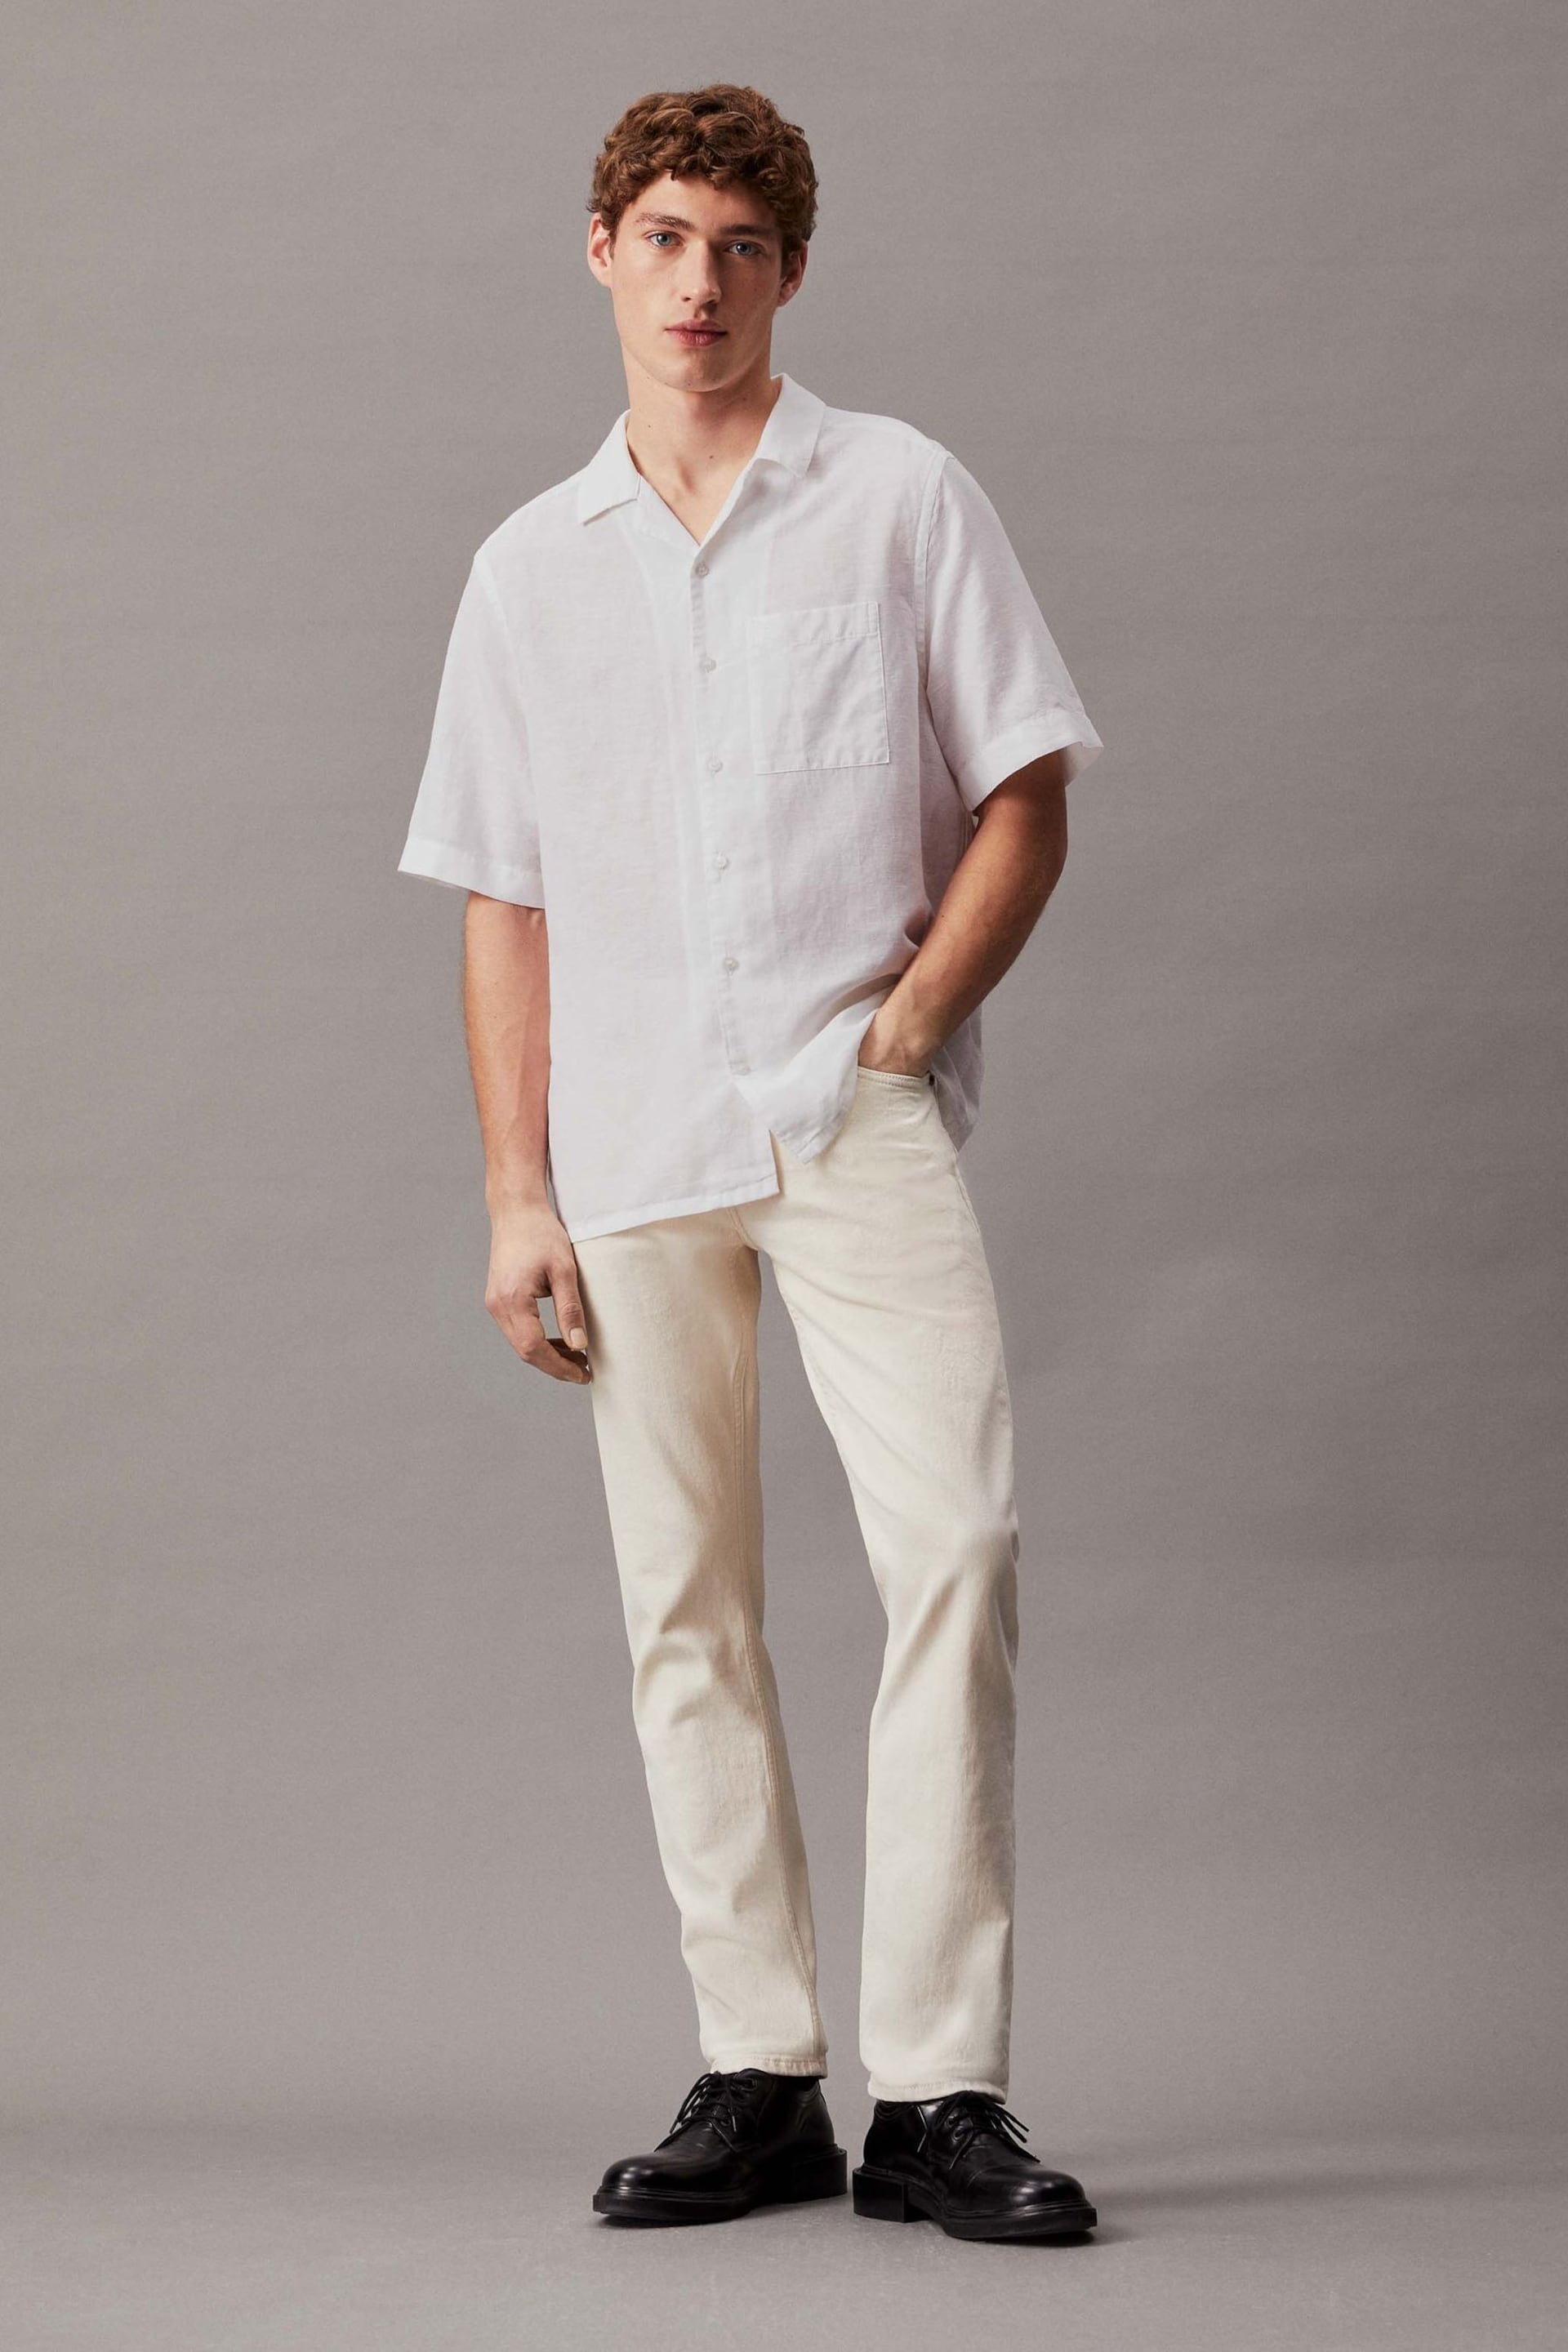 Calvin Klein White Linen Cuban Shirt - Image 1 of 3